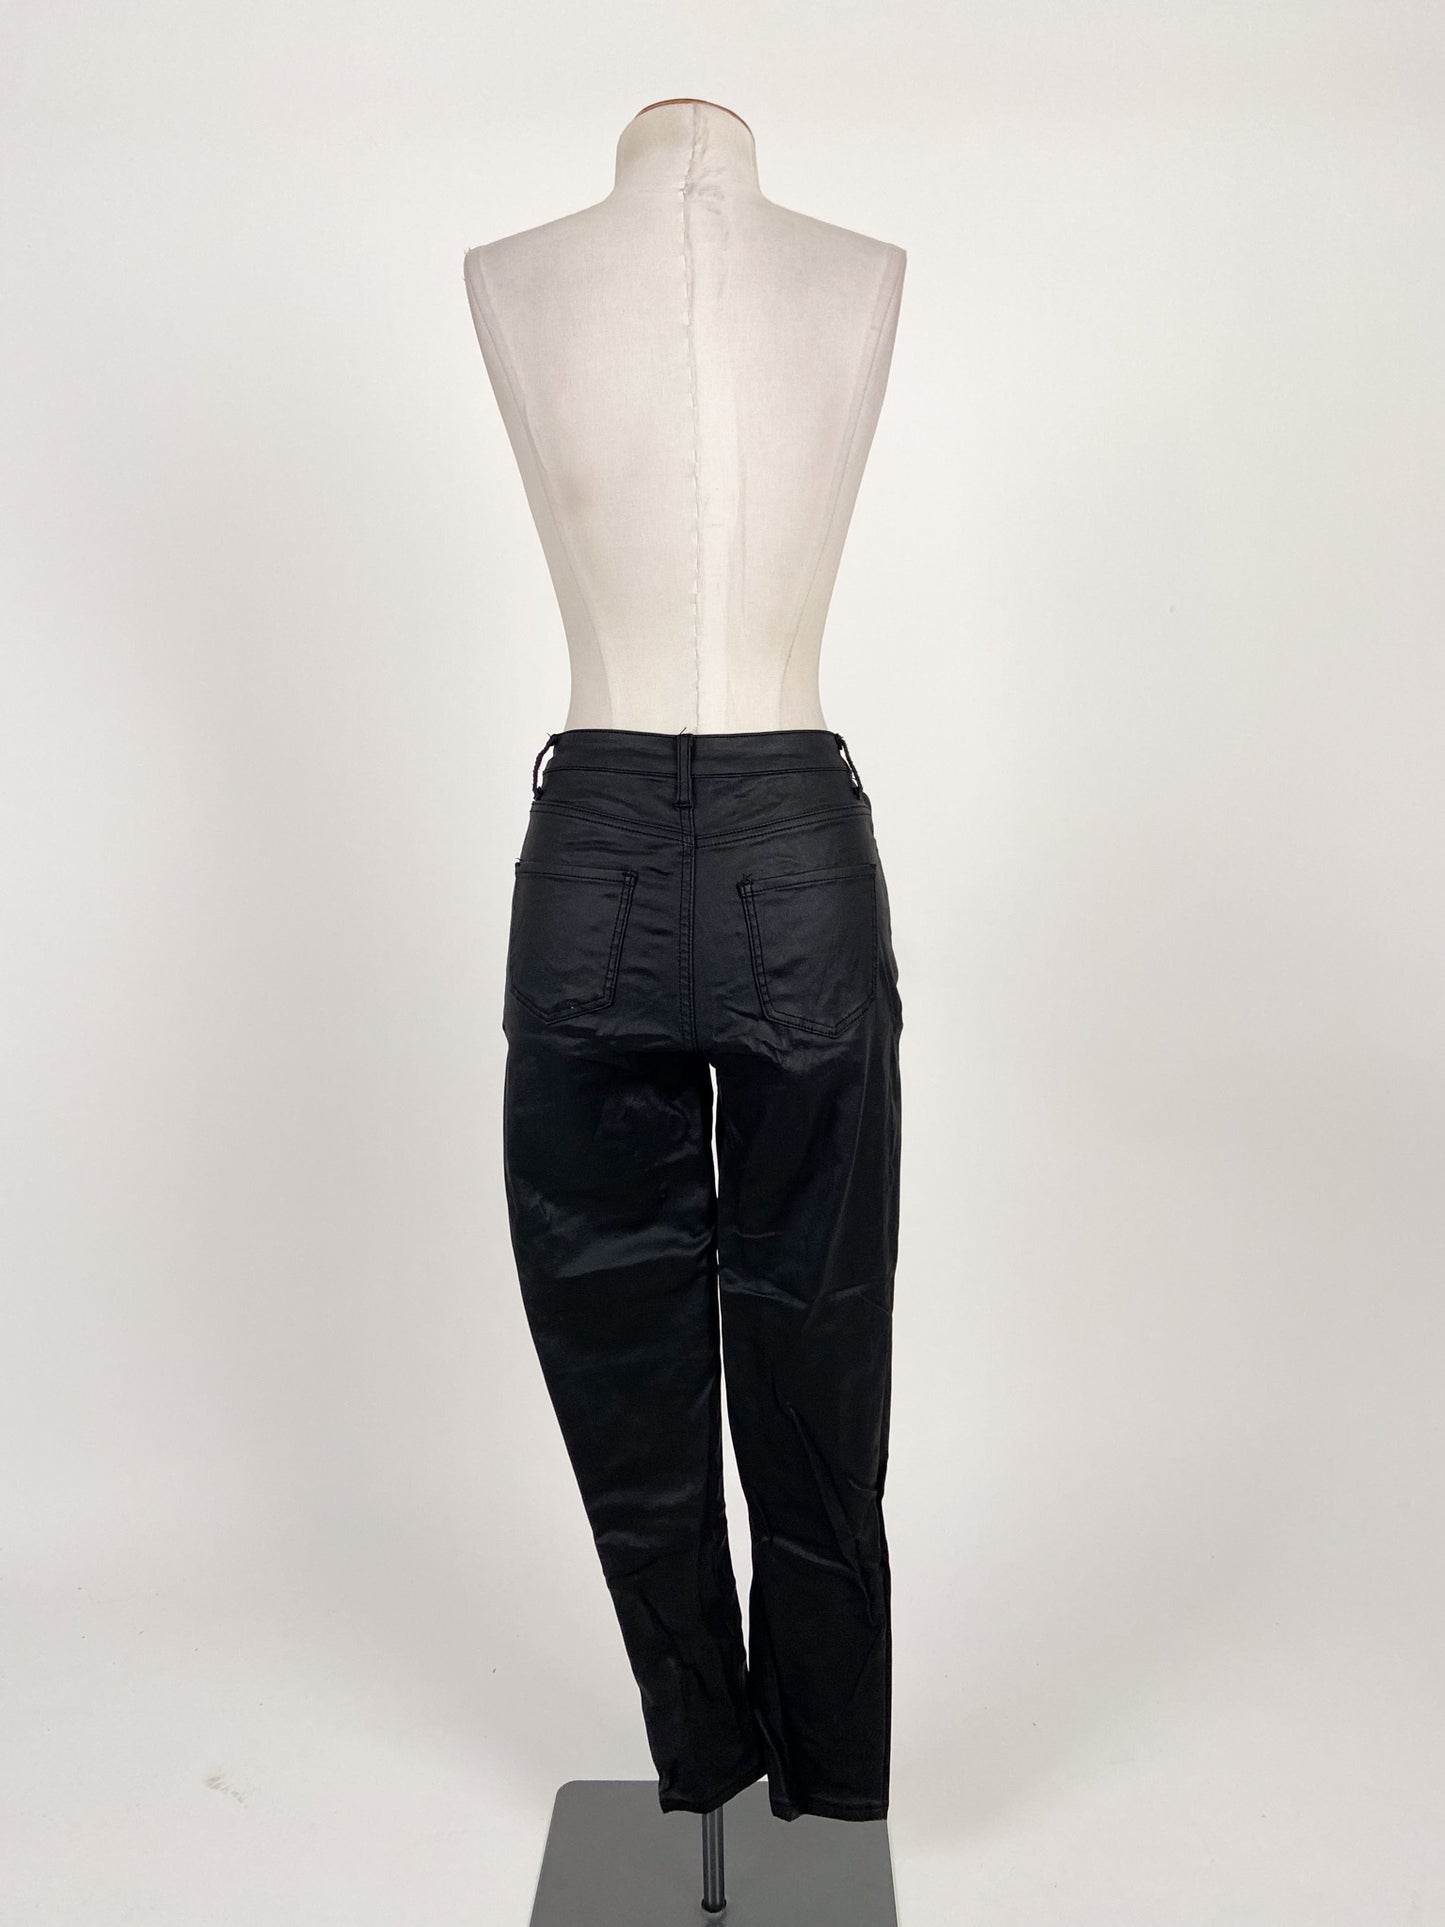 Stndrd Denim | Black Casual Jeans | Size 6